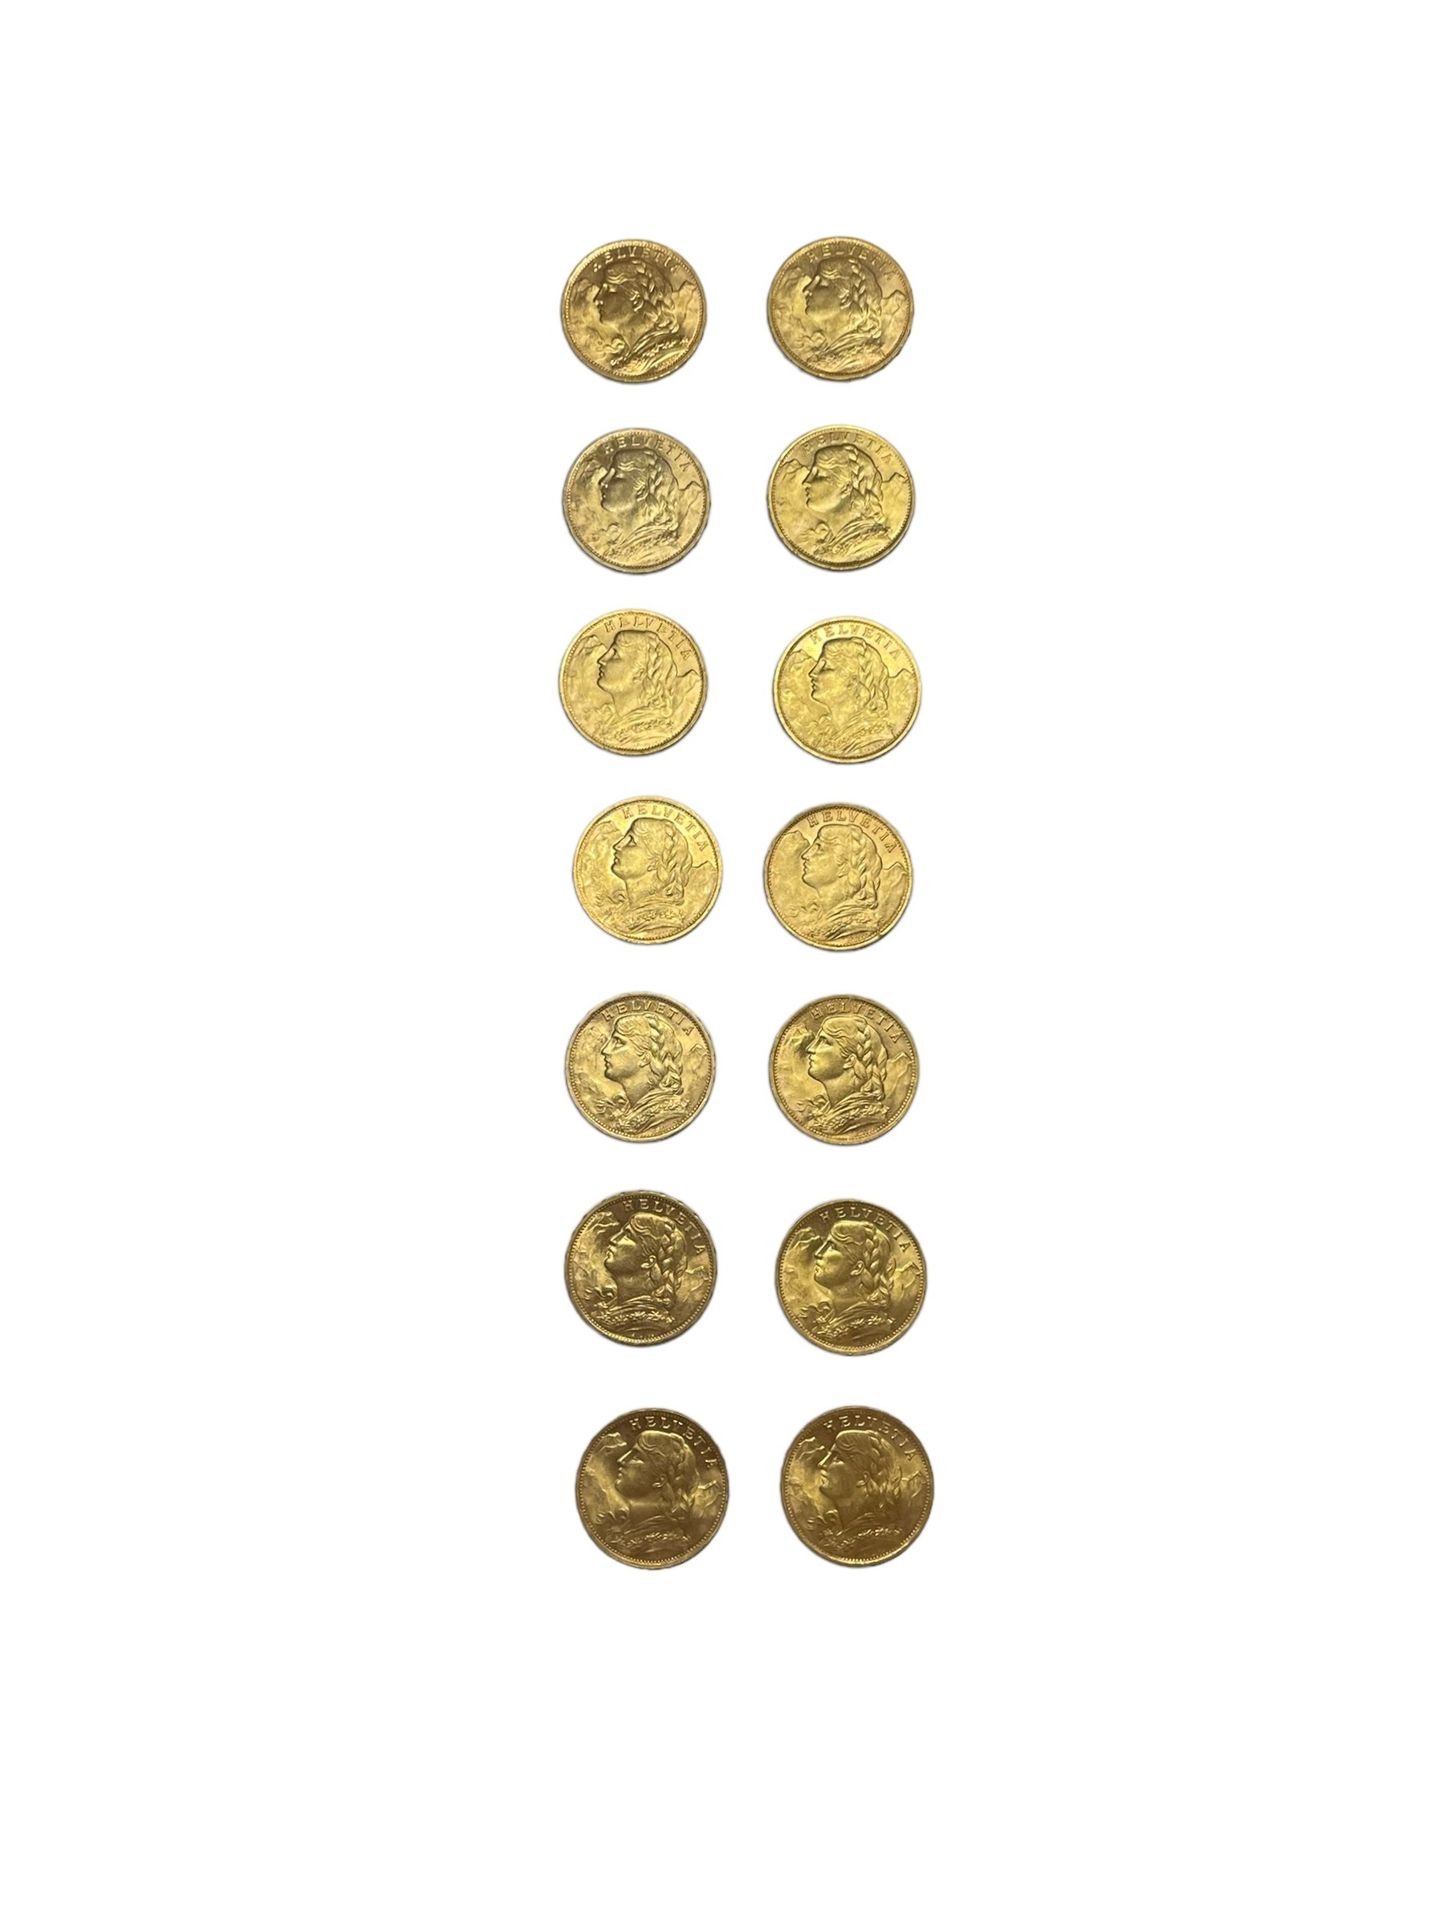 Null SUIZA
14 monedas 20 francos oro
Peso : 90,2 g